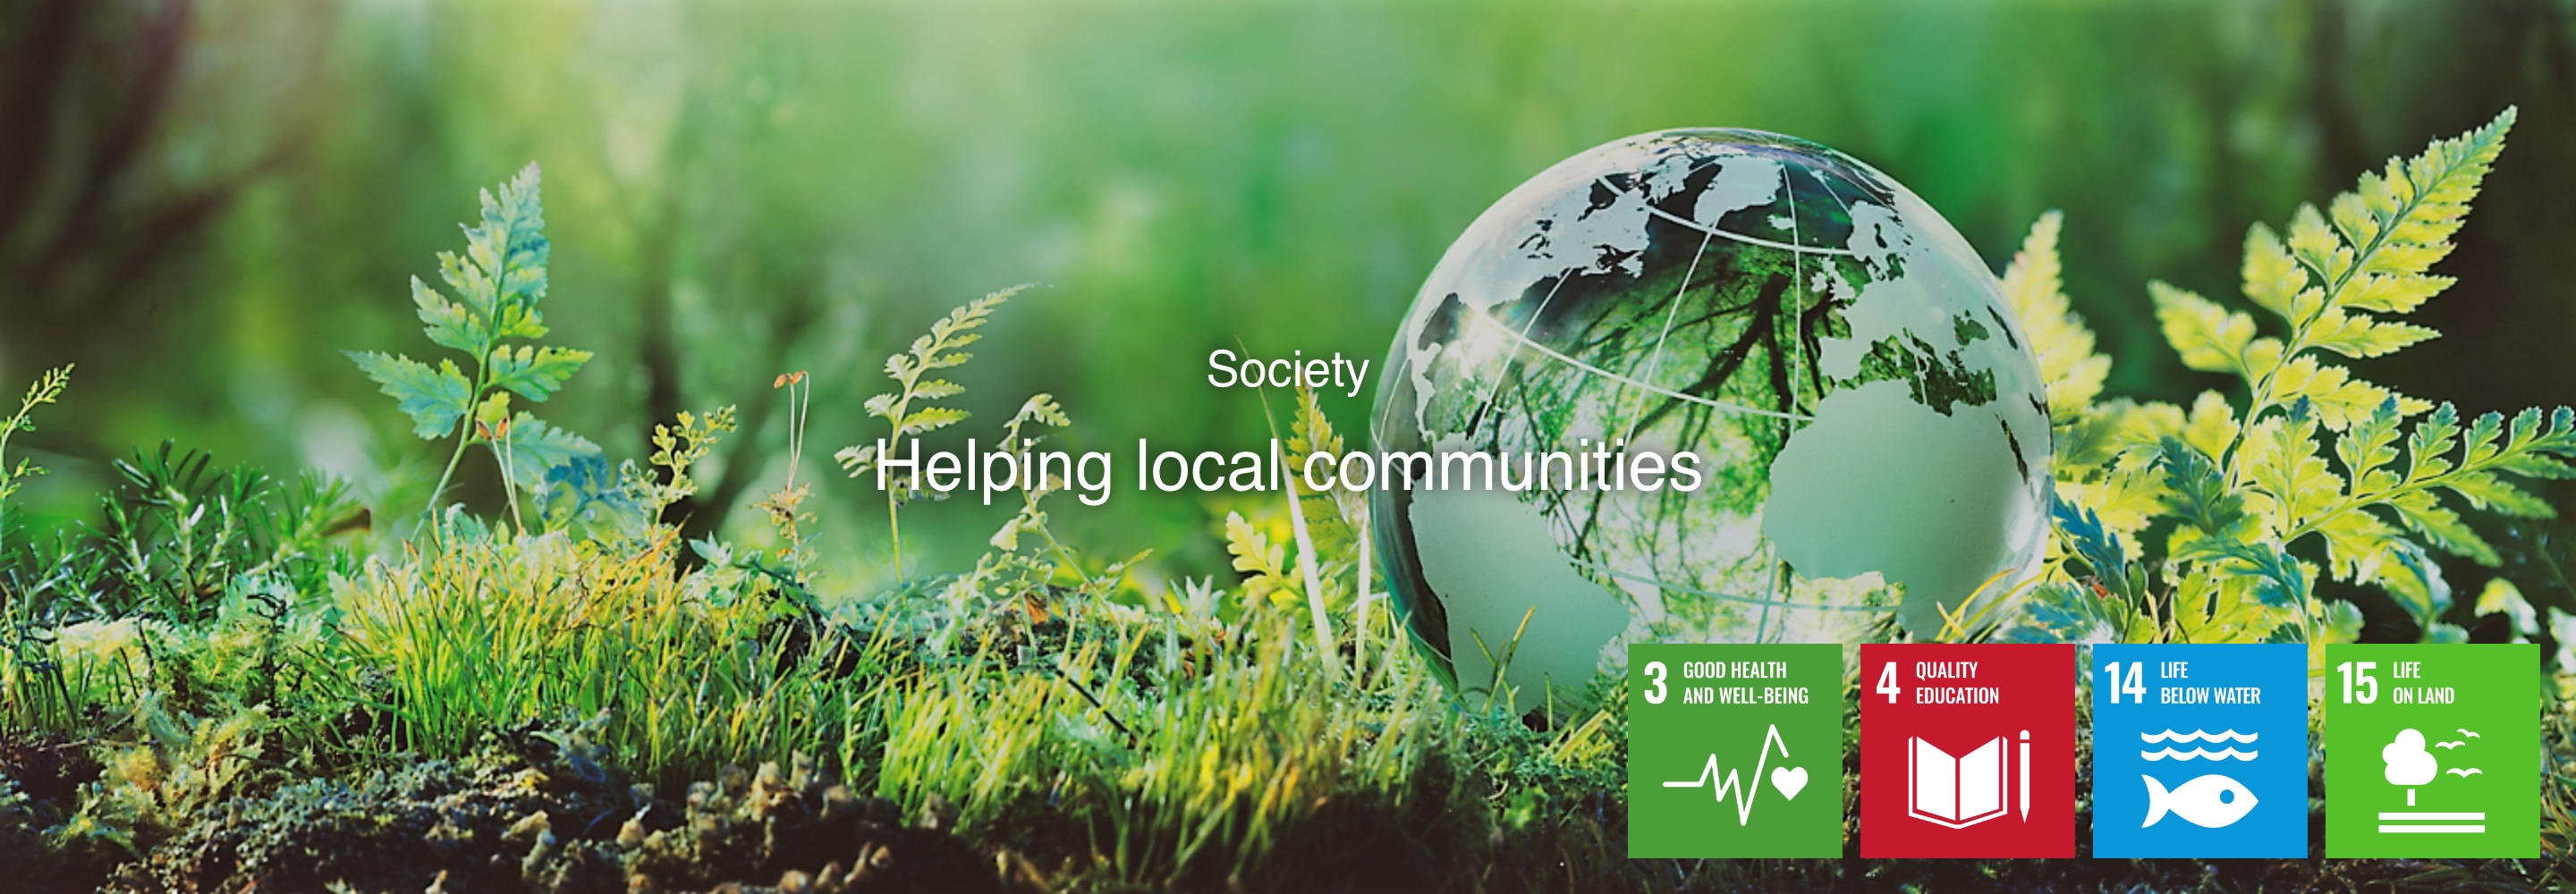 Society Helping Local Communities